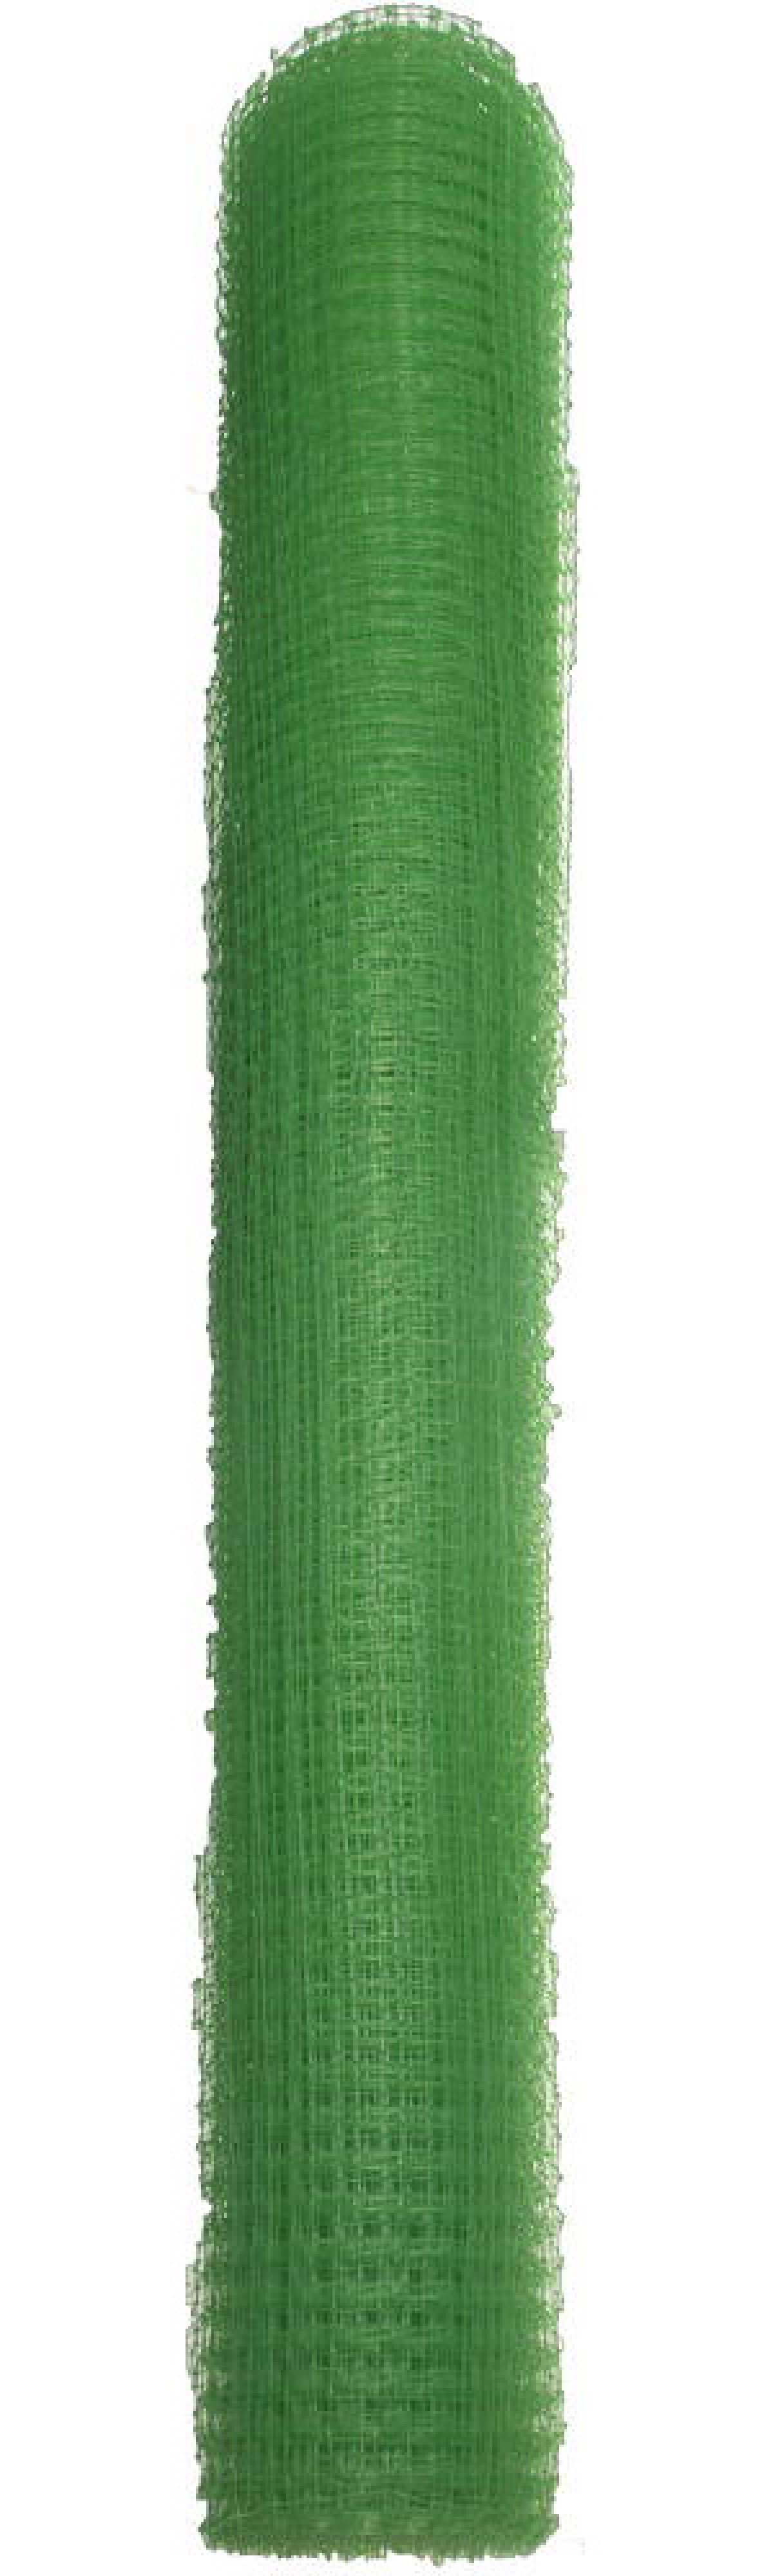 Садовая решетка GRINDA зеленая, 1x20 м, 13х15 мм (422271)